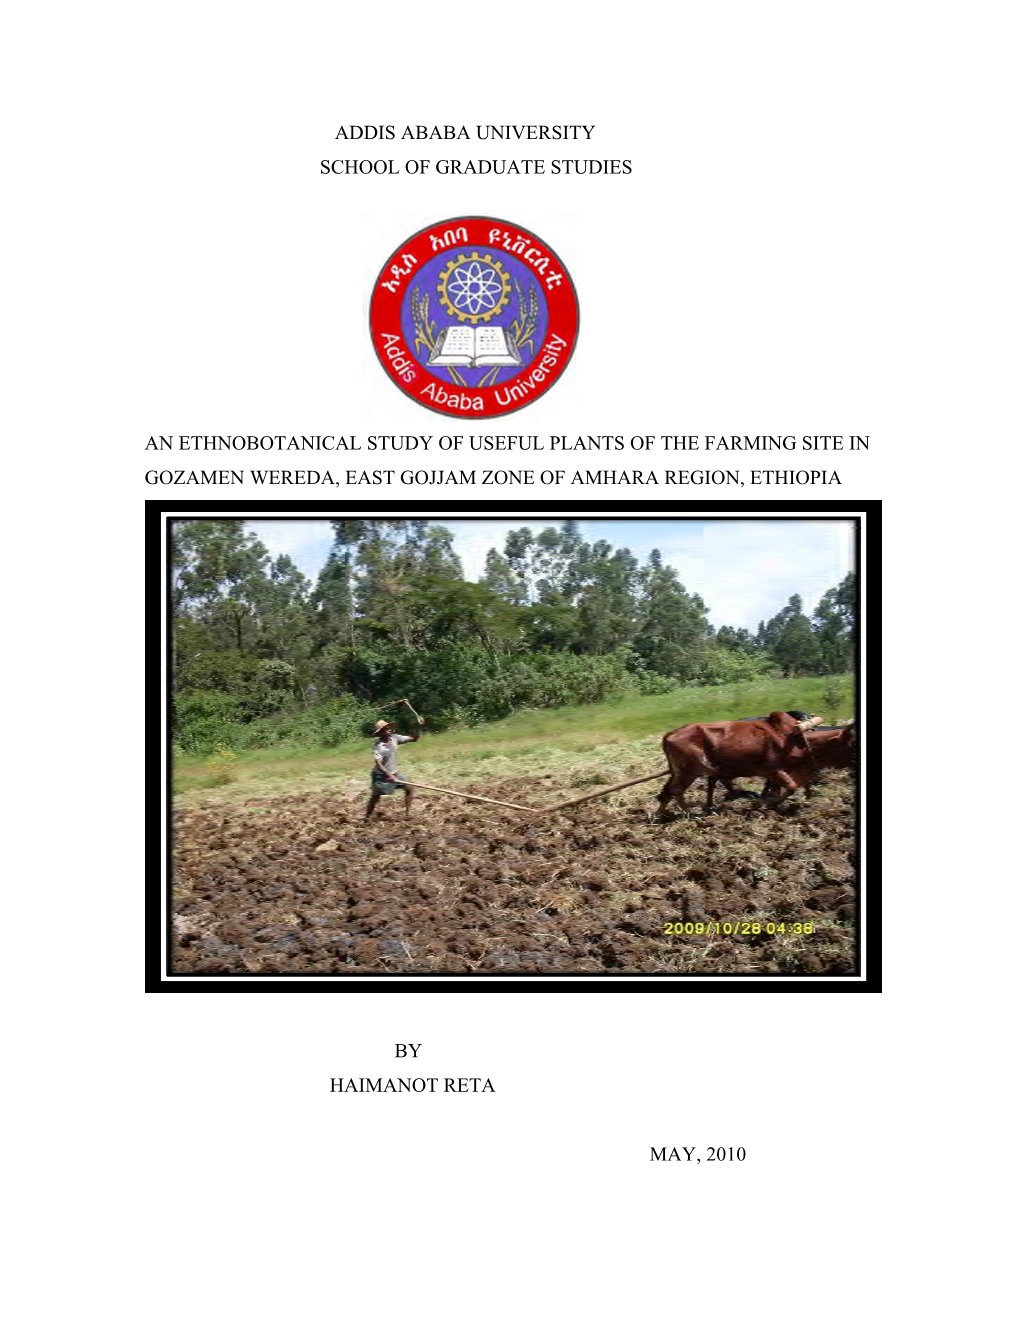 Addis Ababa University School of Graduate Studies an Ethnobotanical Study of Useful Plants of the Farming Site in Gozamen Wereda